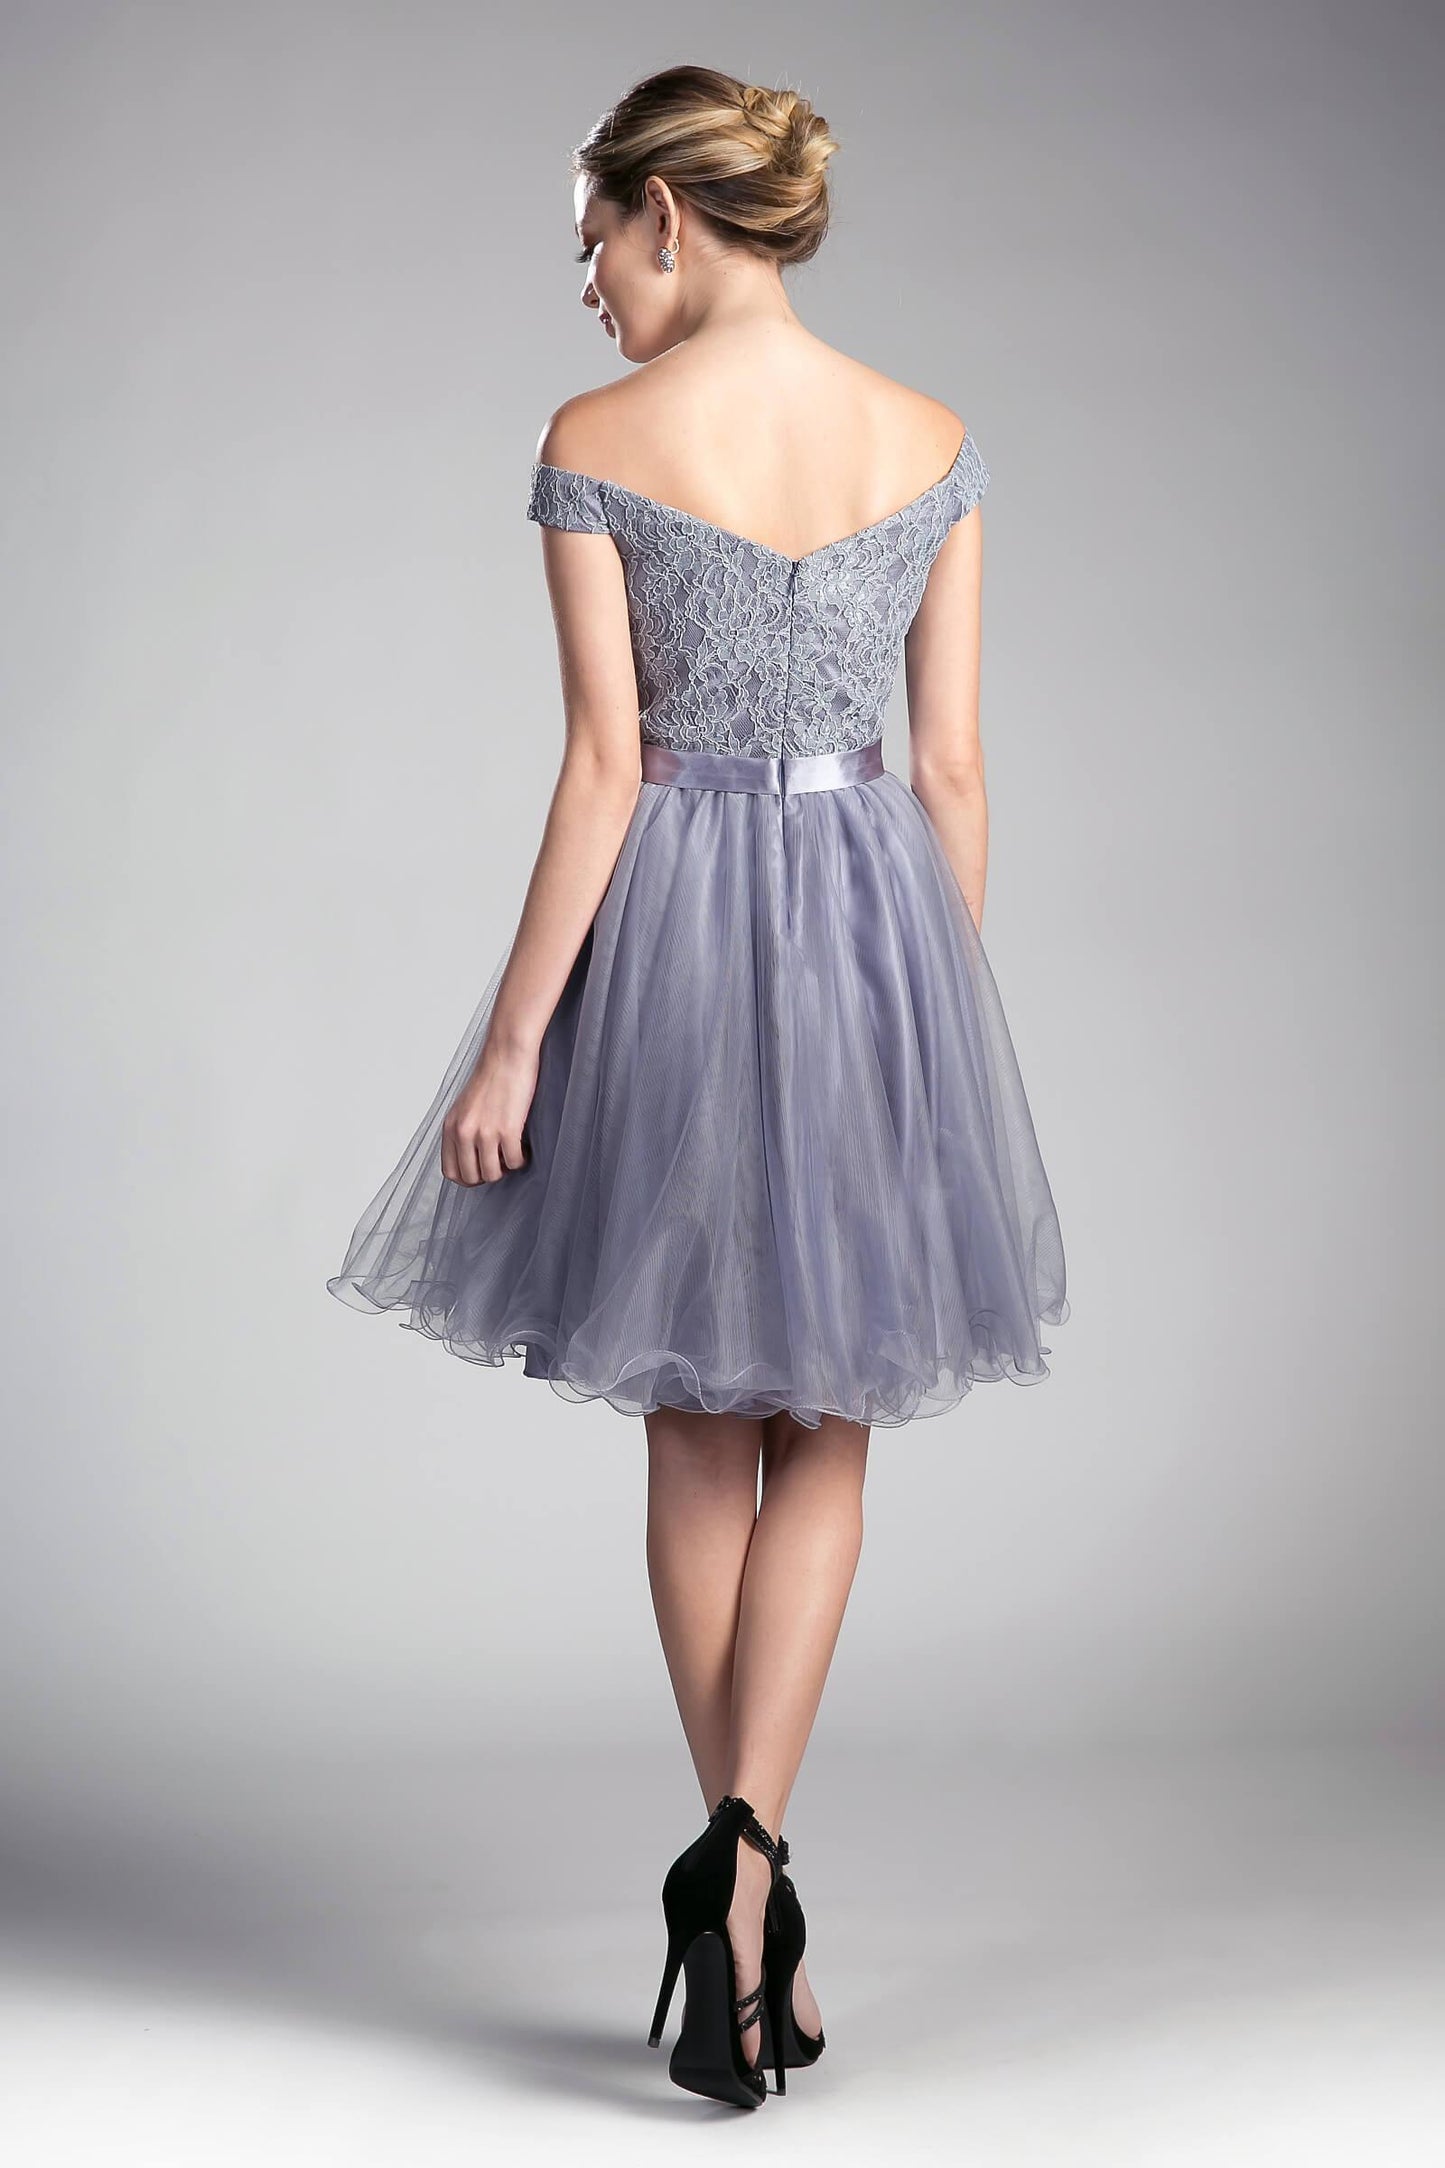 Prom Short Off Shoulder Homecoming Lace Cocktail Dress - The Dress Outlet Cinderella Divine